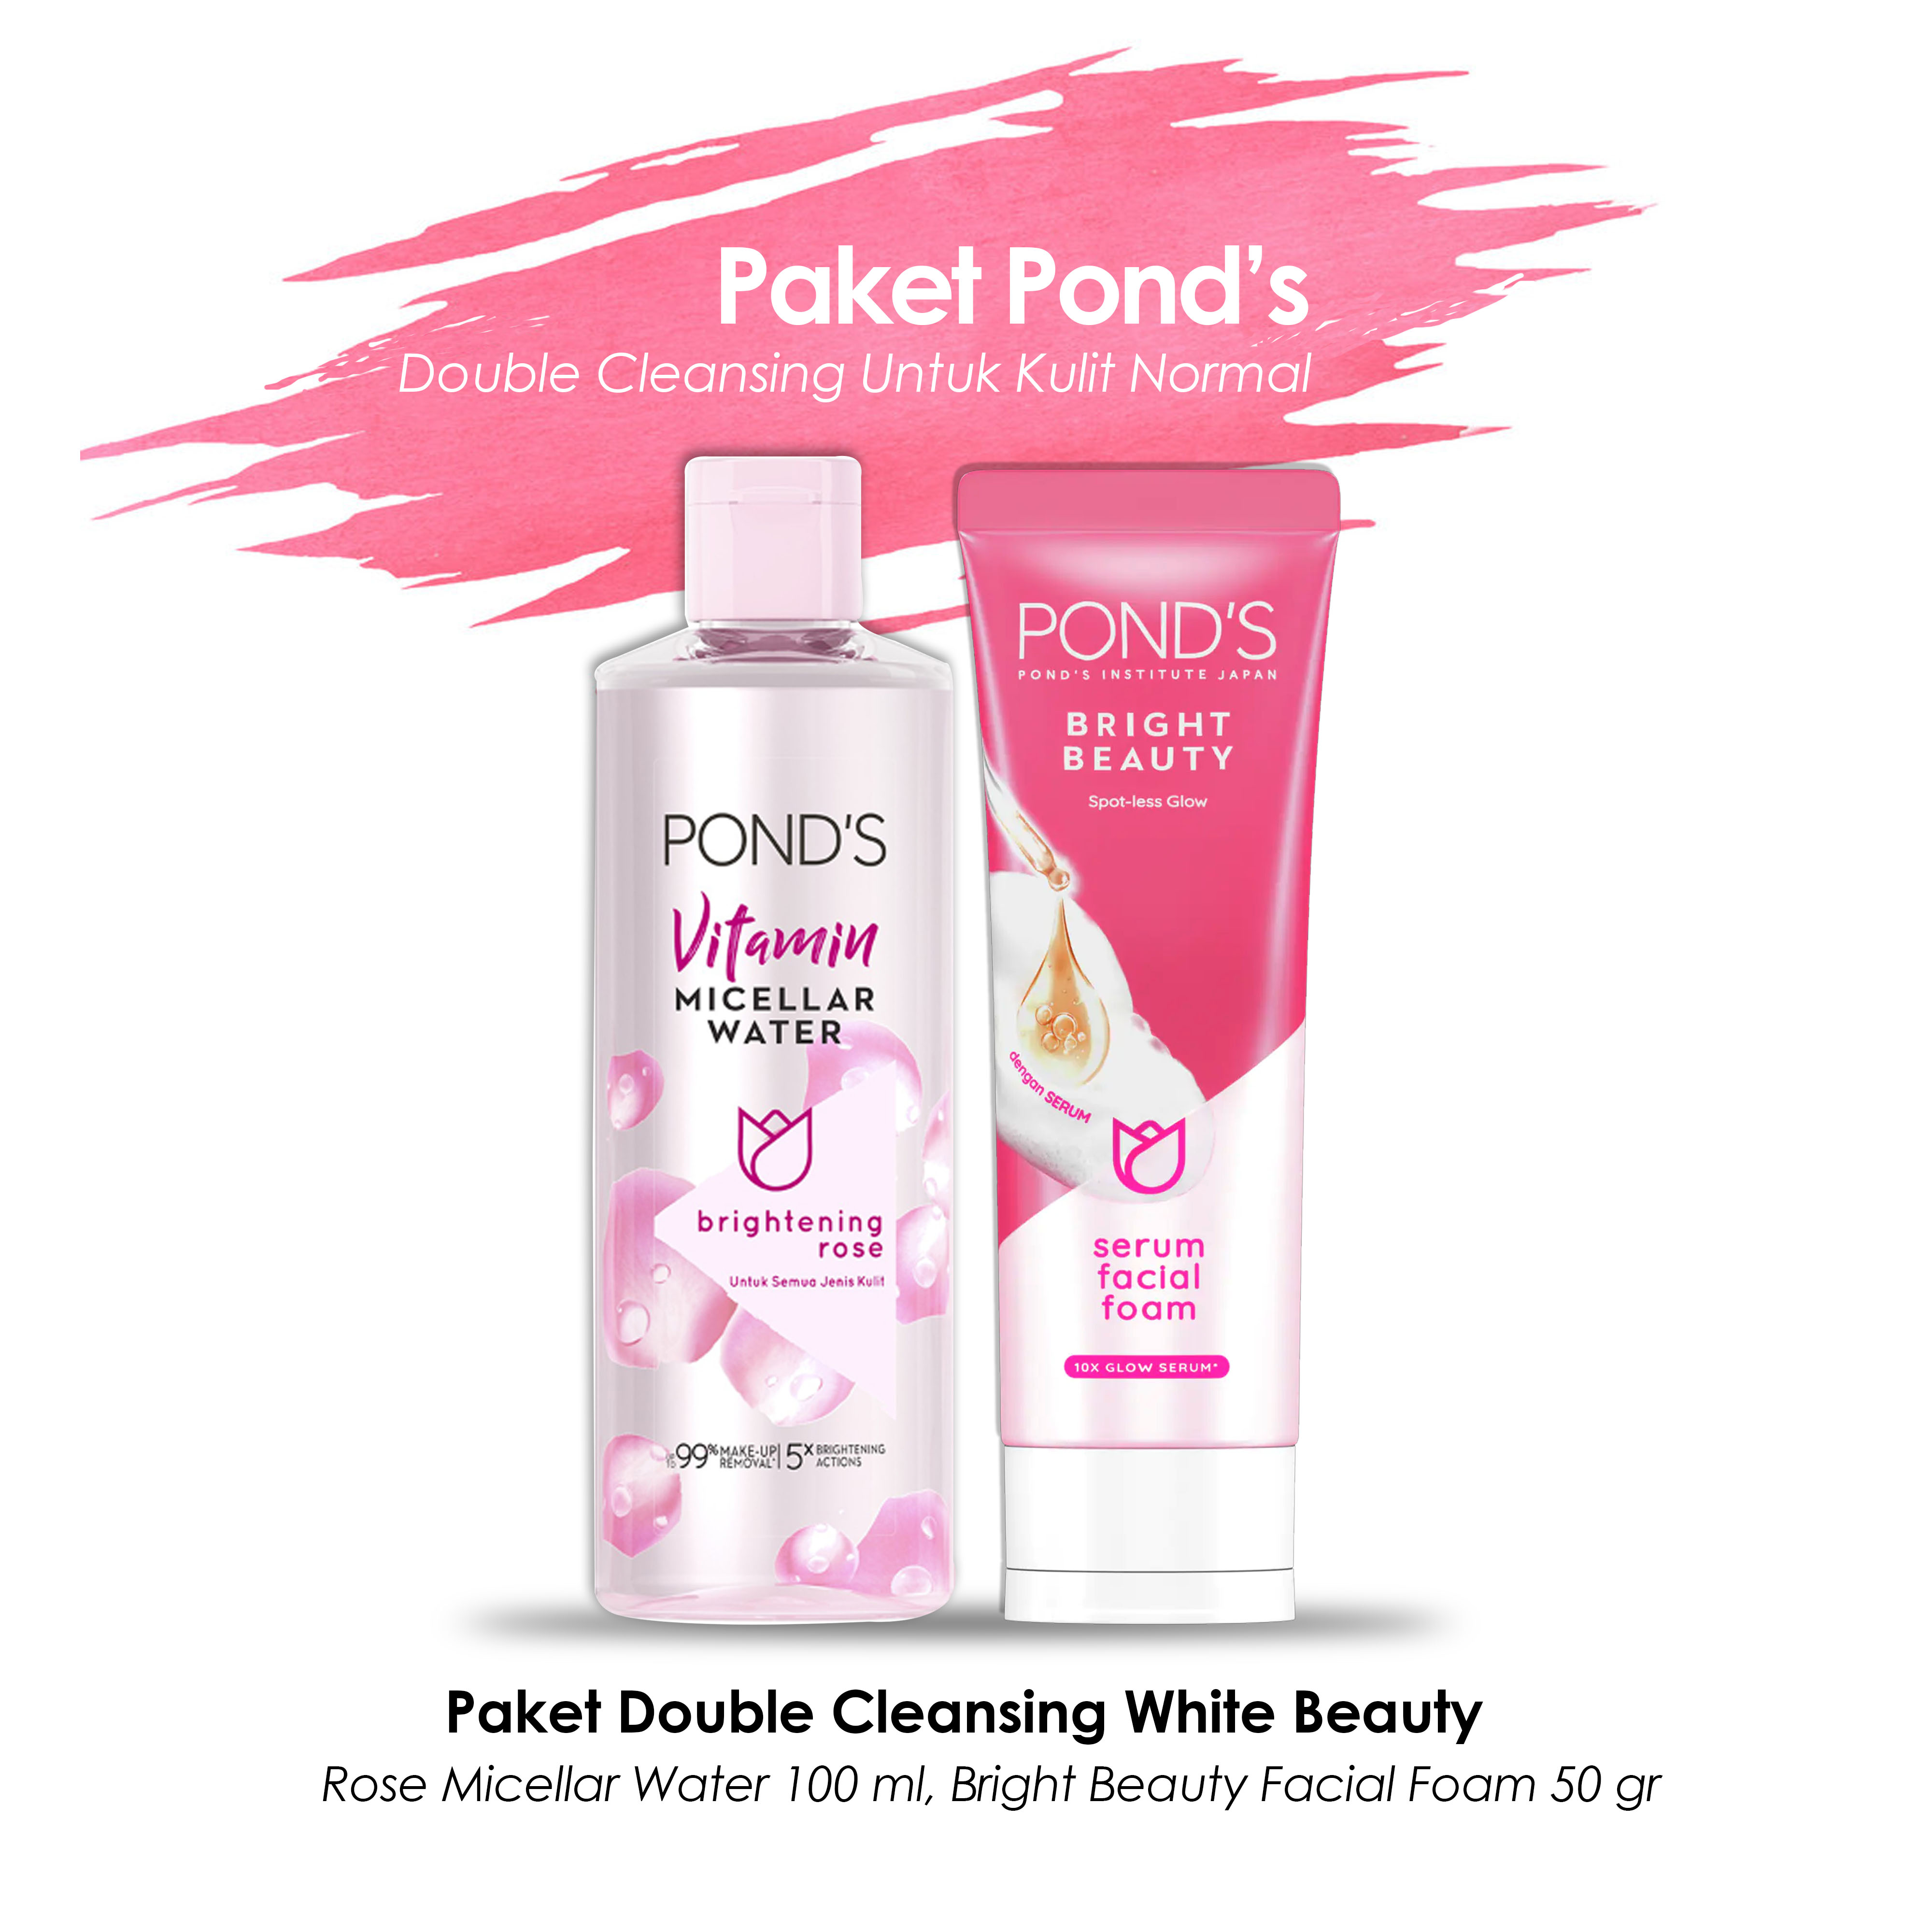 Paket Ponds Bright Beauty / White Beauty - Double Cleansing - 2 pcs Untuk Kulit Normal (Micellar Rose 100ml, Face Wash 50 ml)